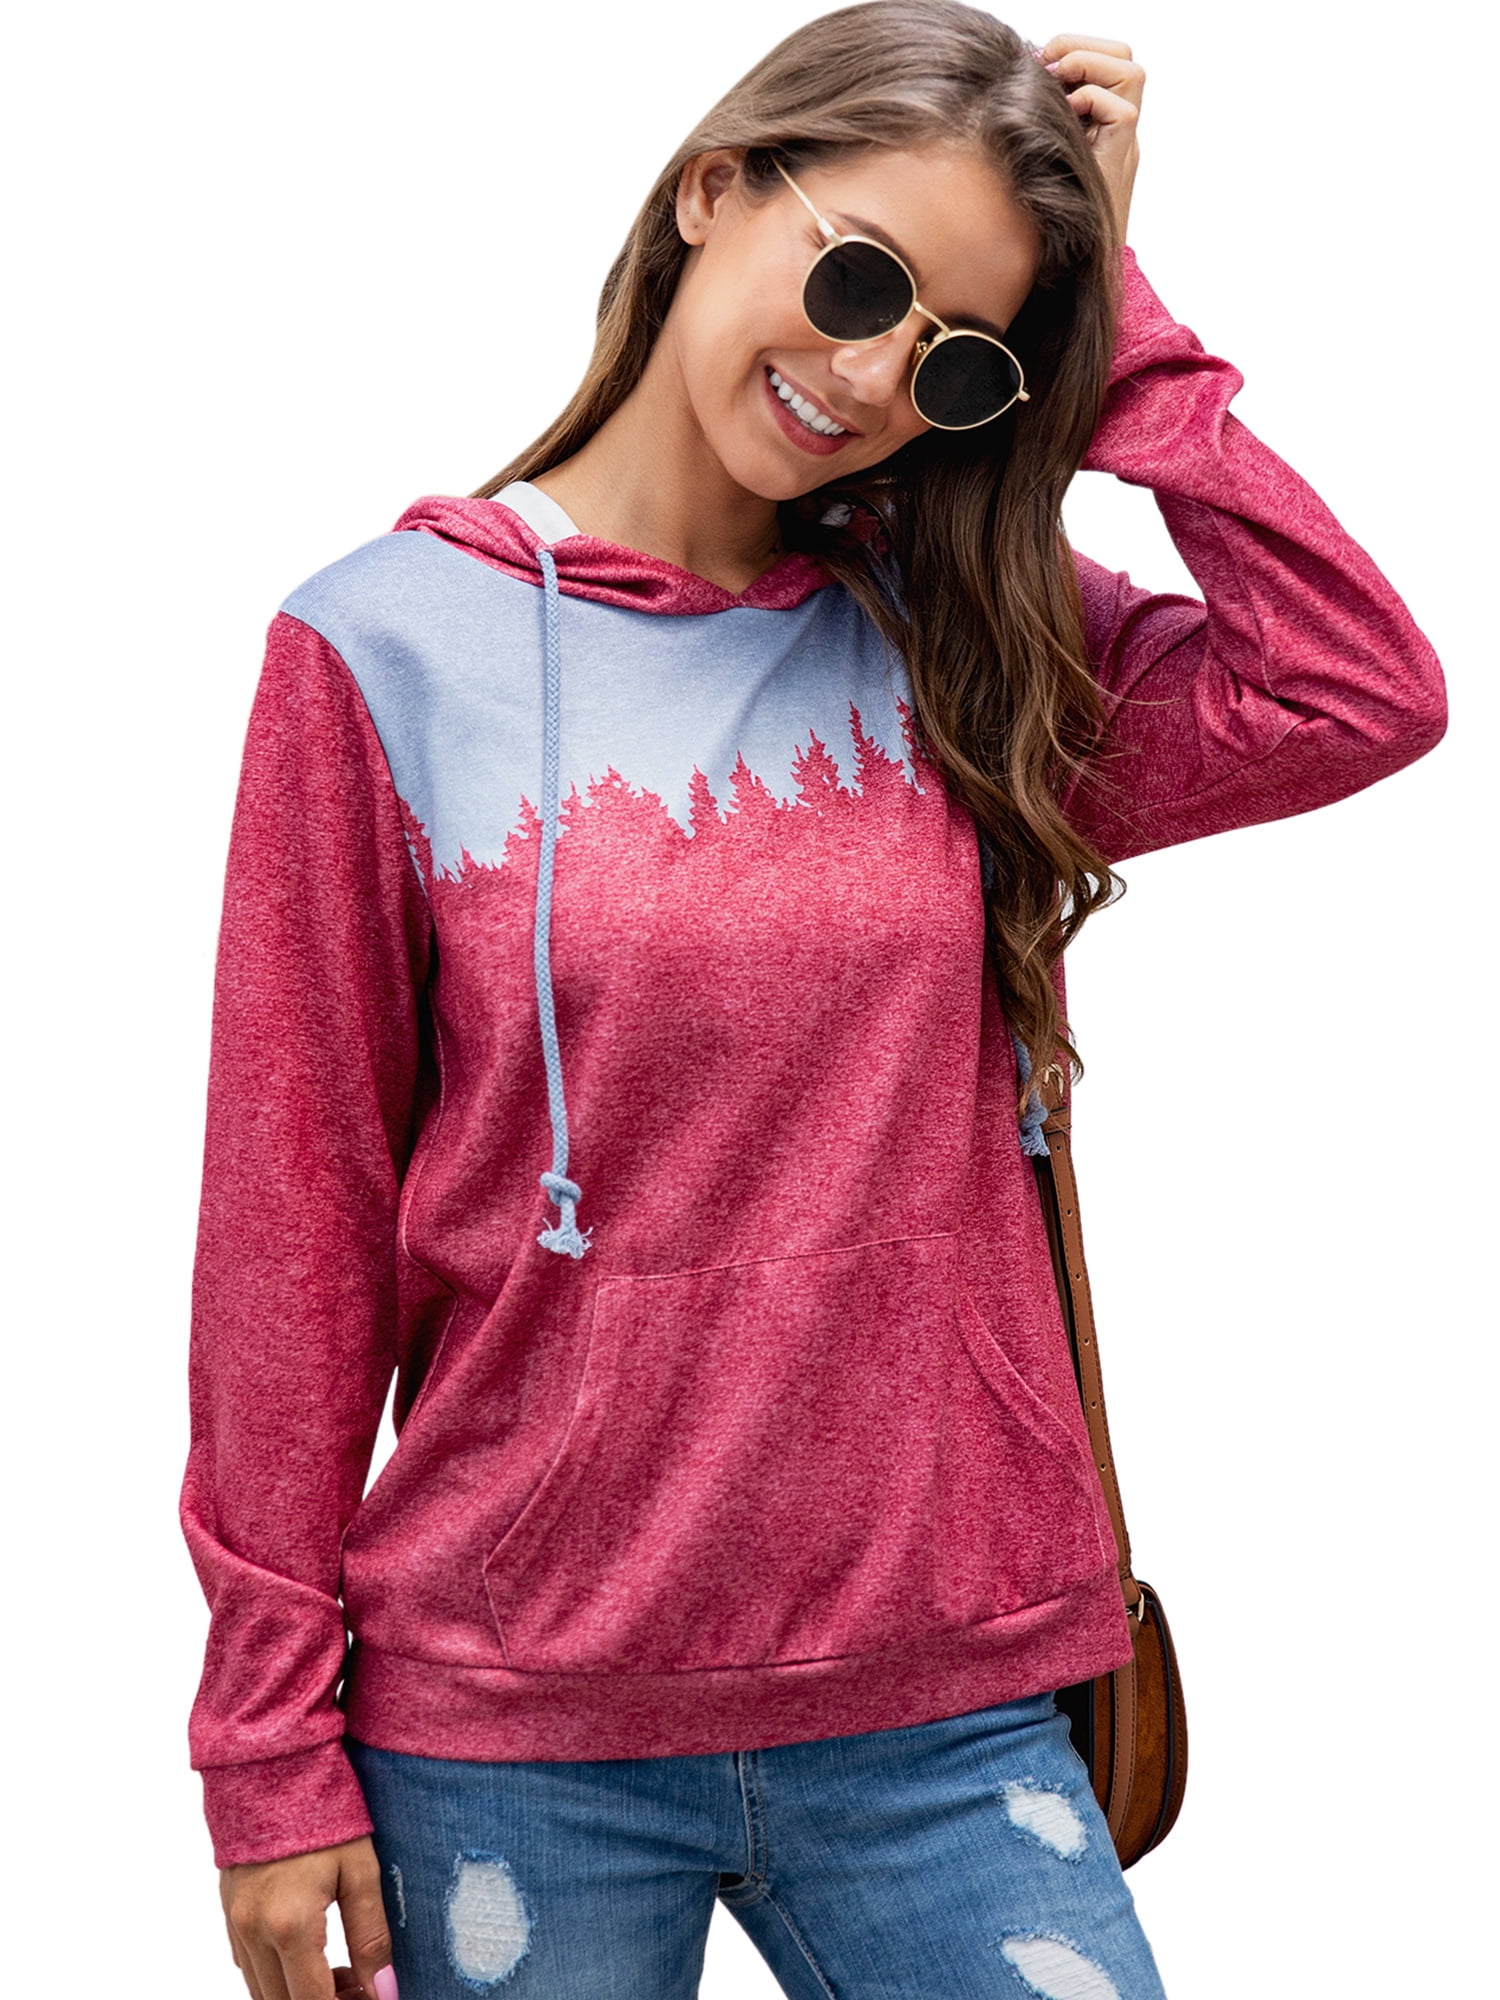 NEWTECHNOLOGYY - Tie Dye Sweatshirts Hoodies Women Sweatshirt Casual ...